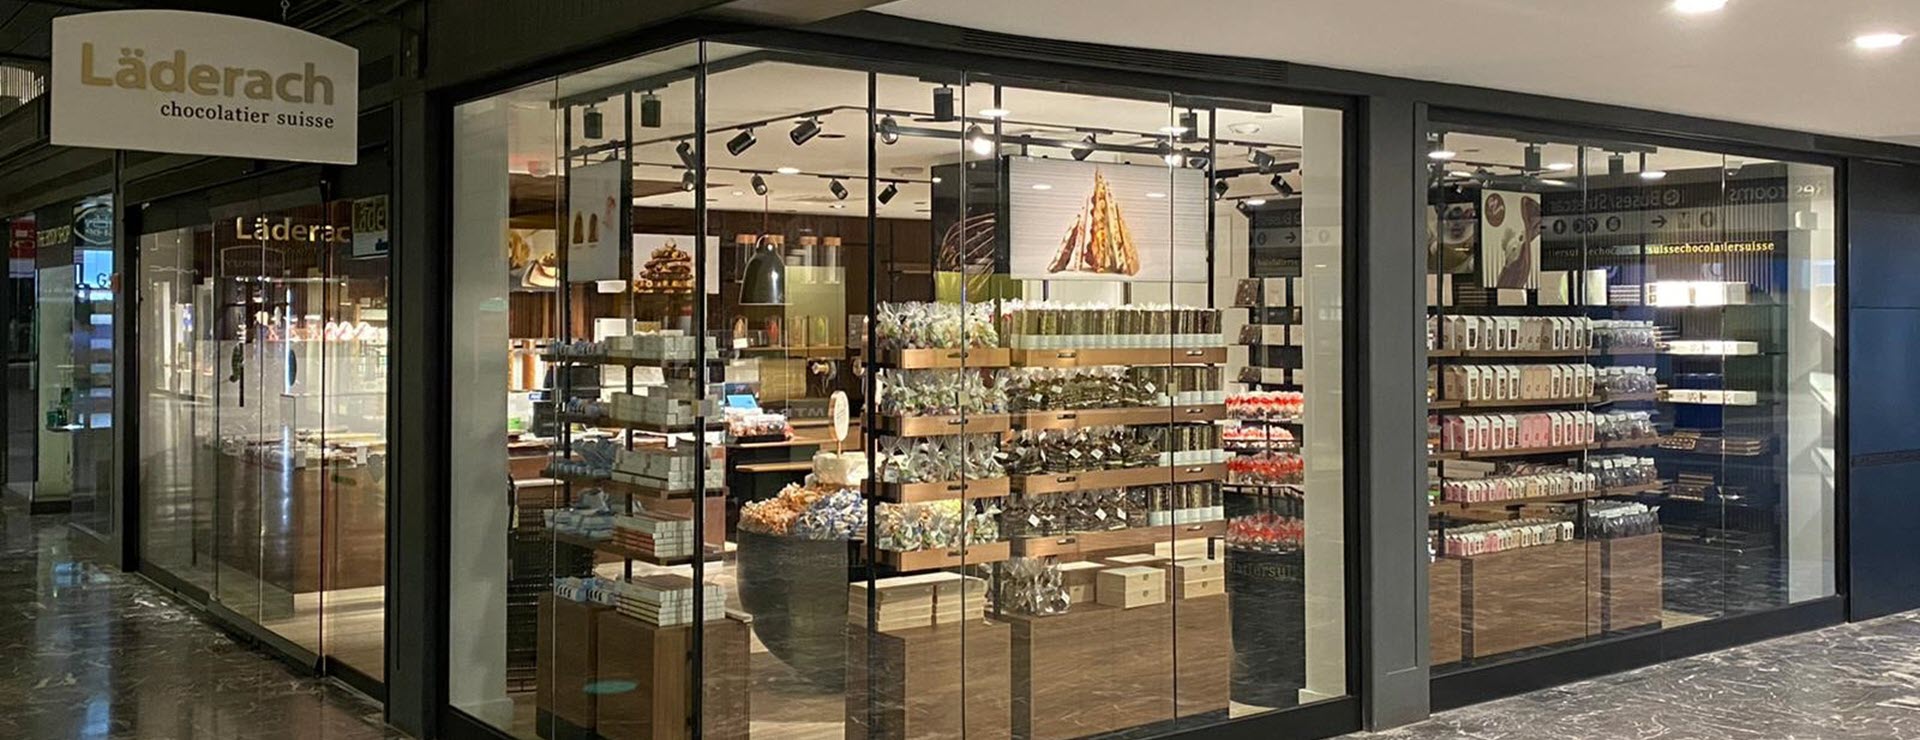 Läderach opens fresh artisanal Swiss chocolate experience store in Washington DC Union Station